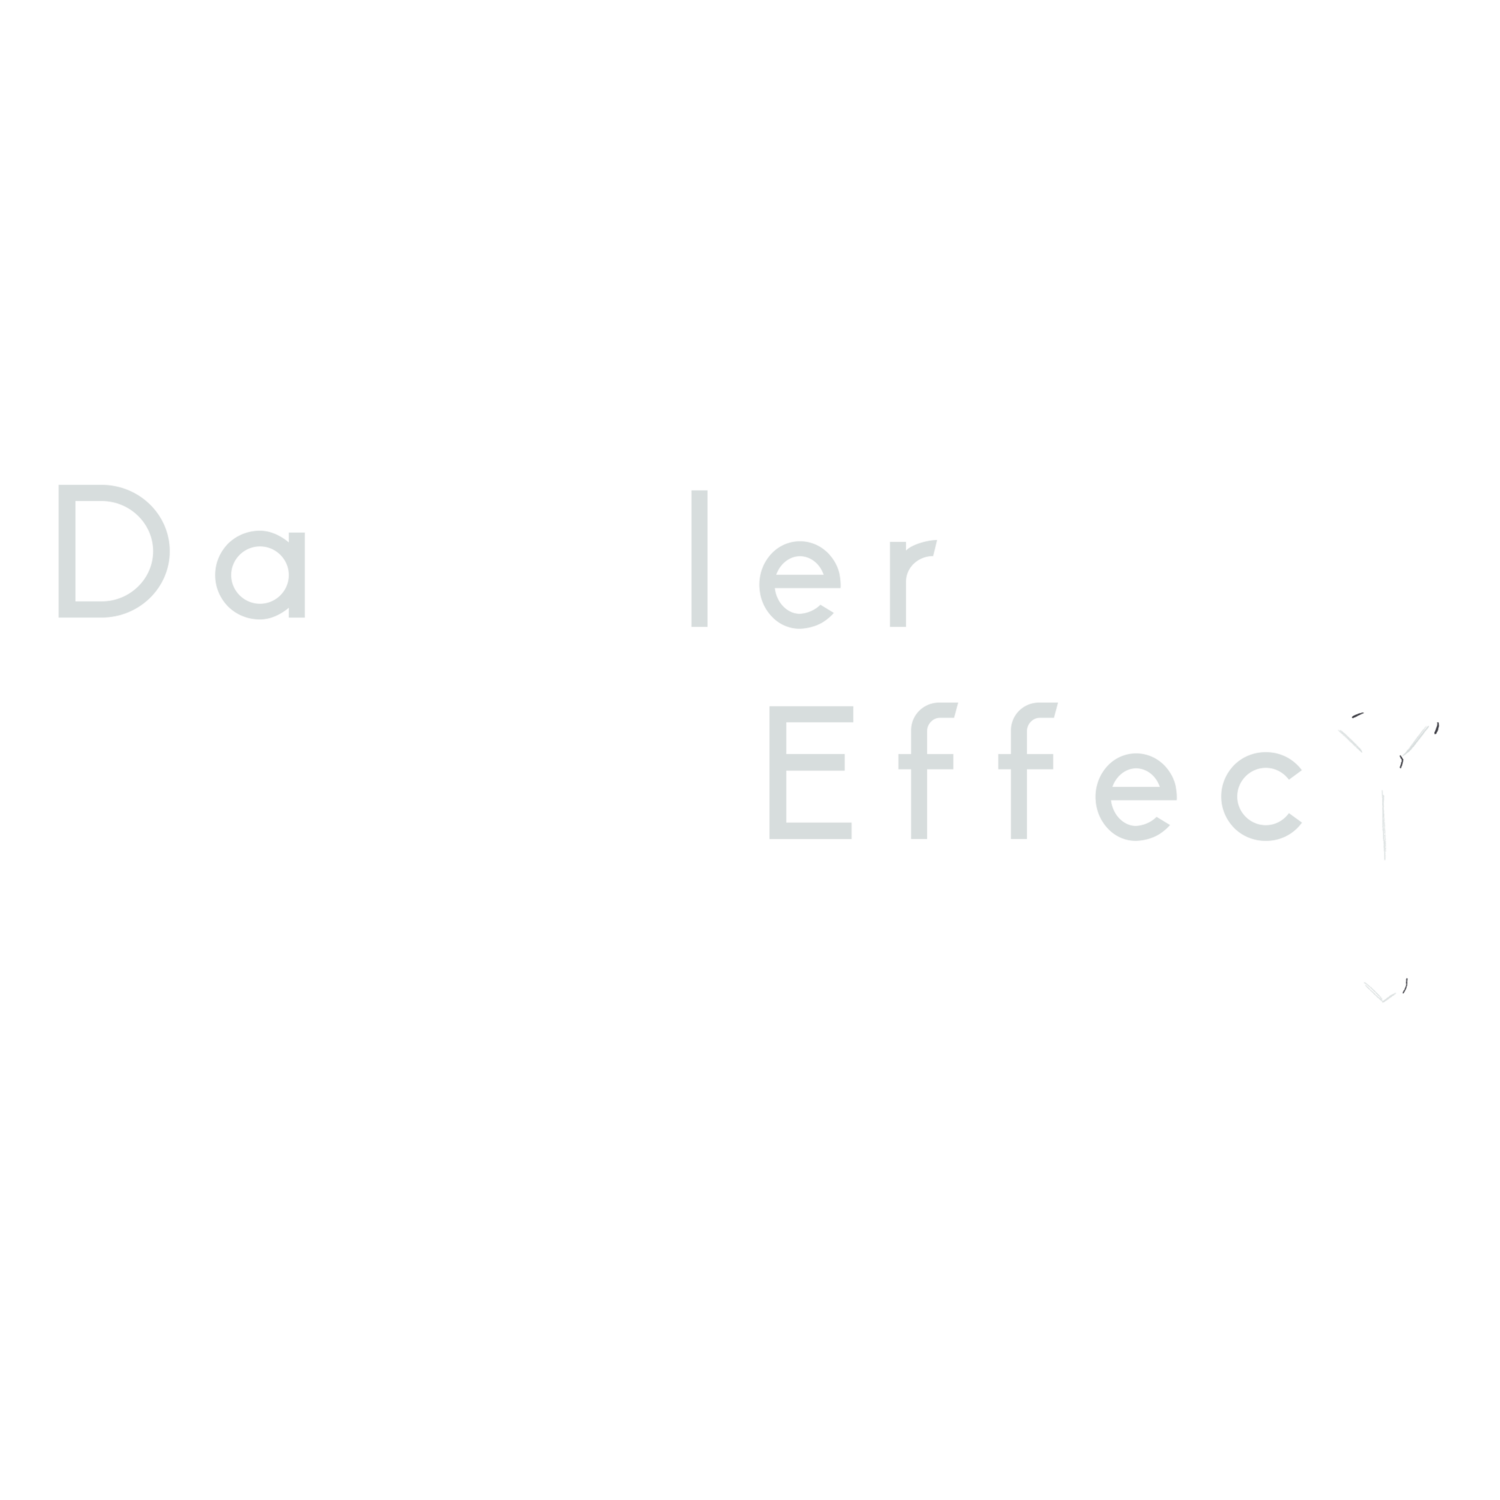 The Dabbler Effect